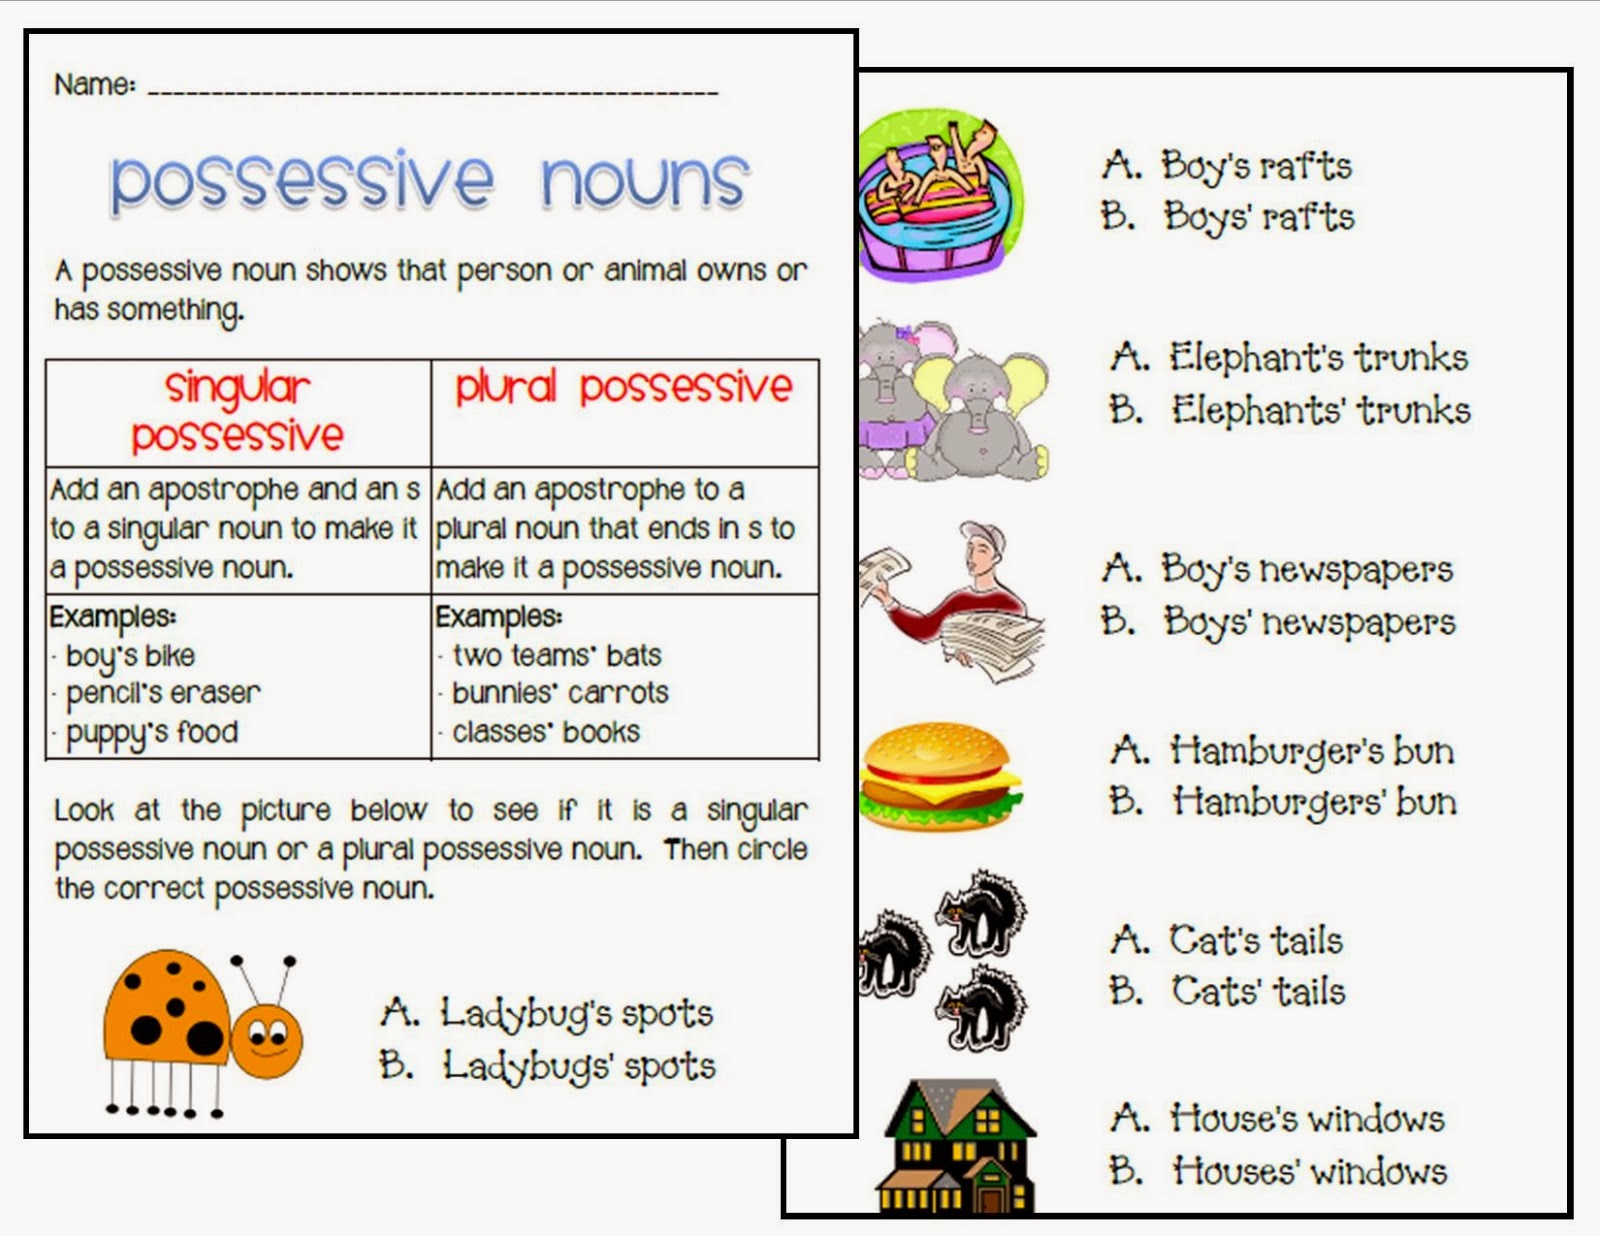 possessive-nouns-in-english-what-is-a-possessive-noun-the-following